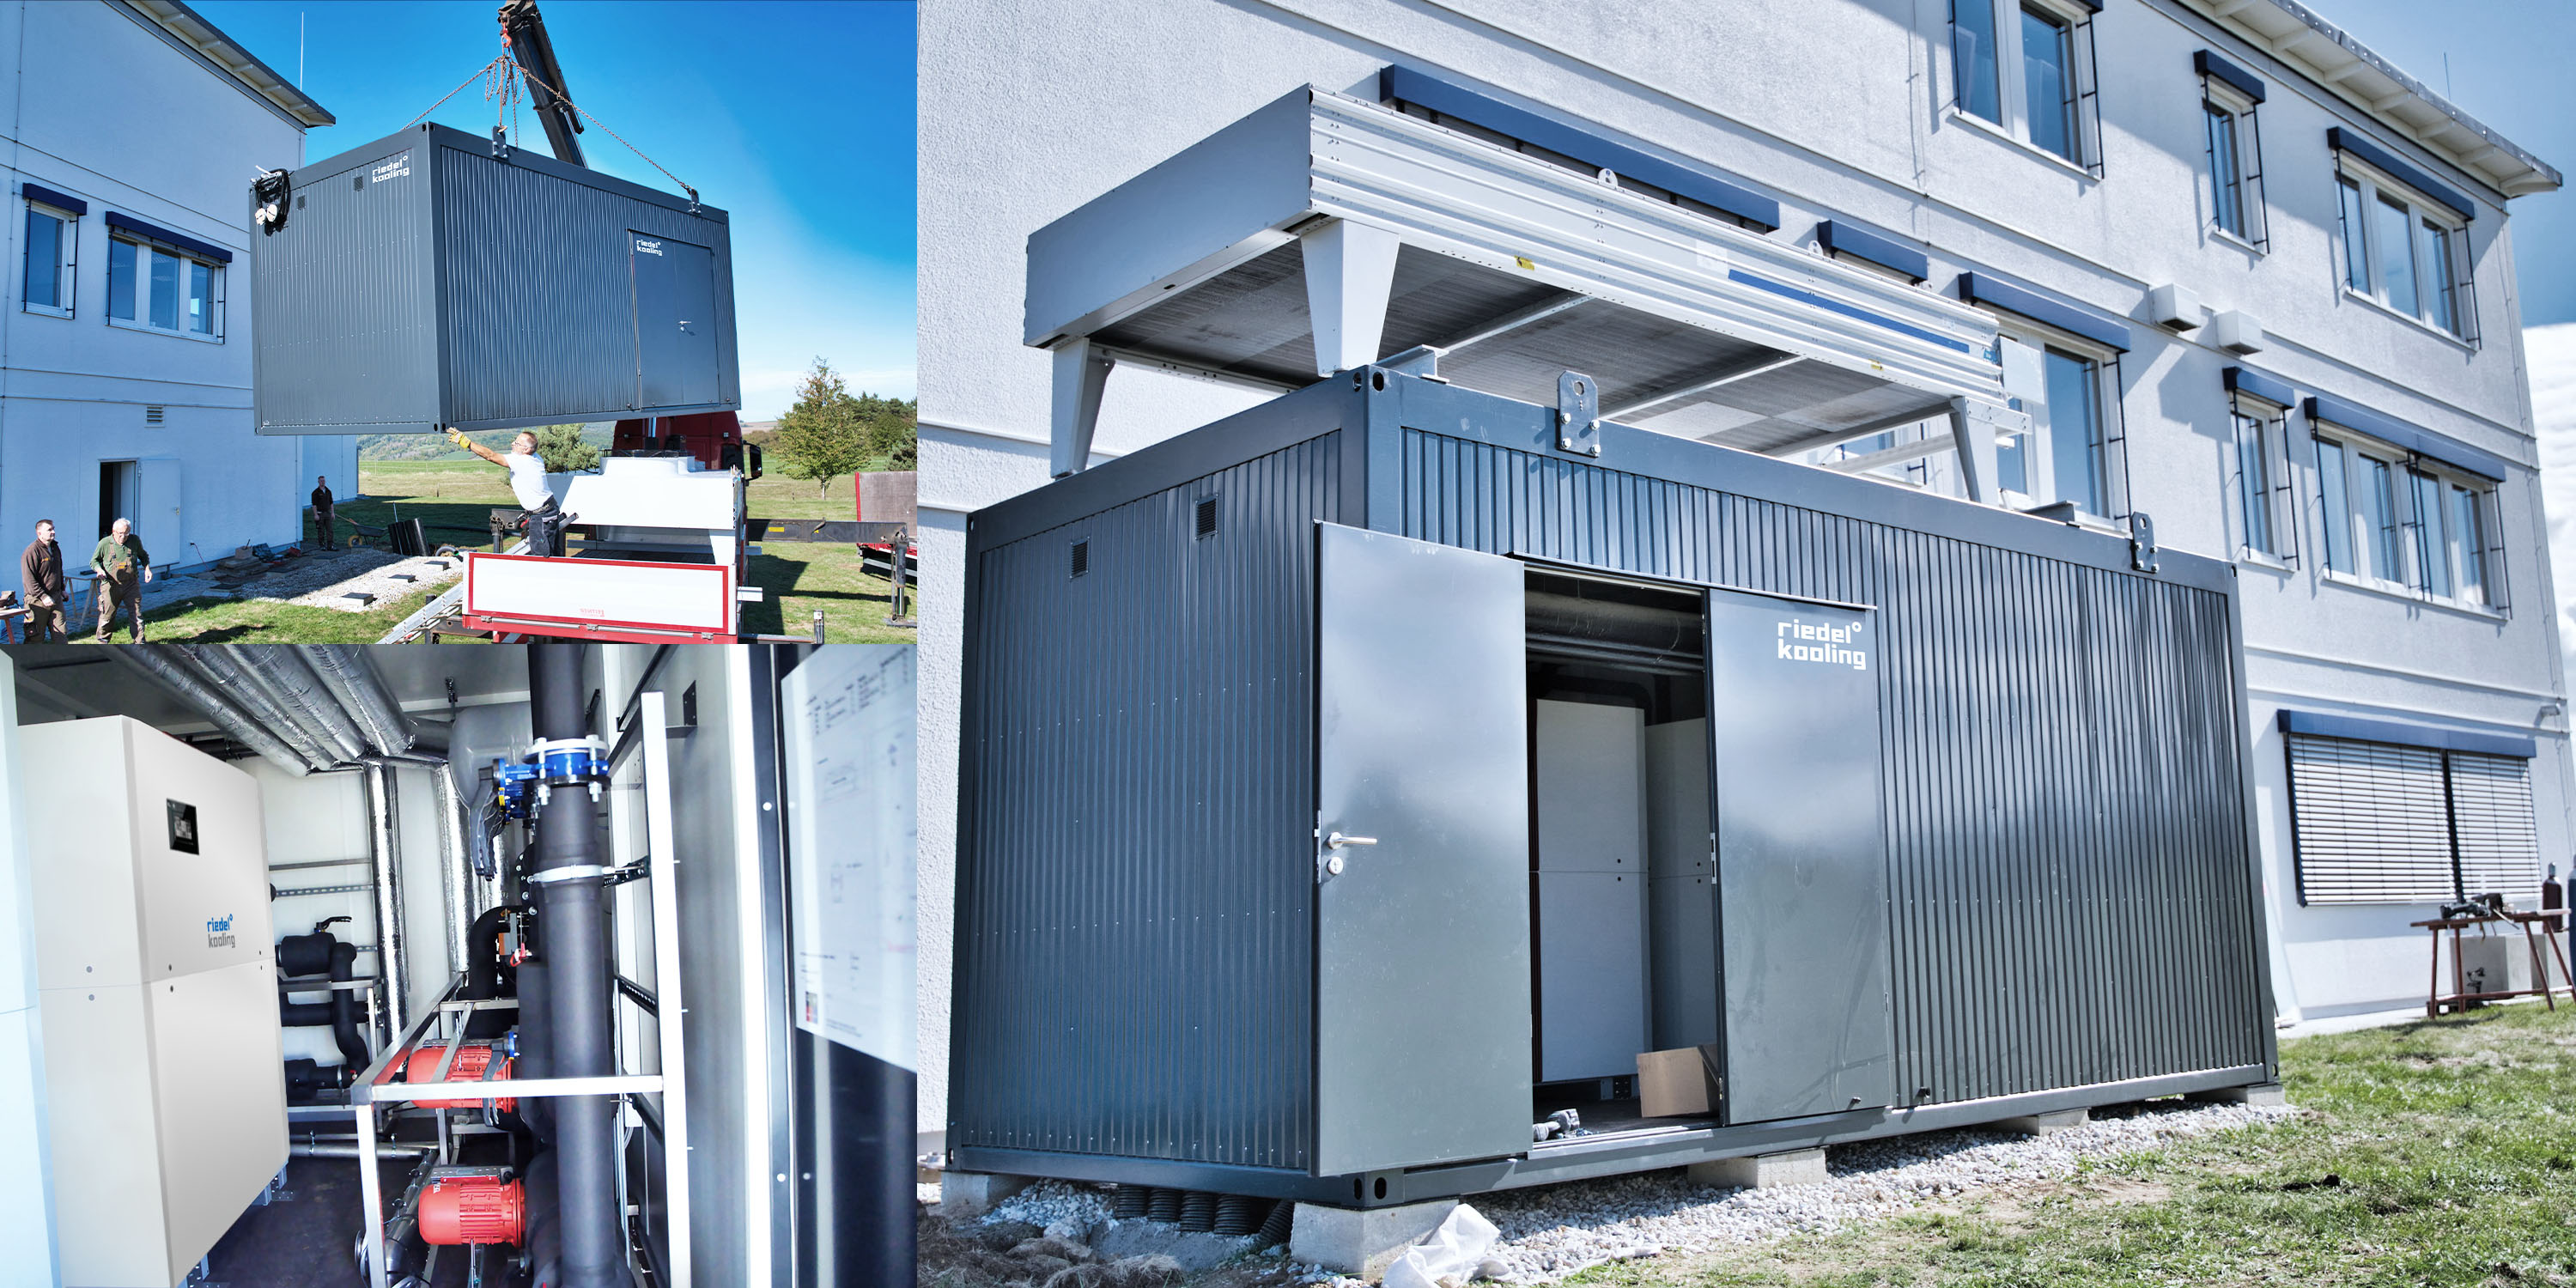 Riedel Kooling, Heiz- und Kühlsysteme im Container, Plug-and-Play-Lösung.